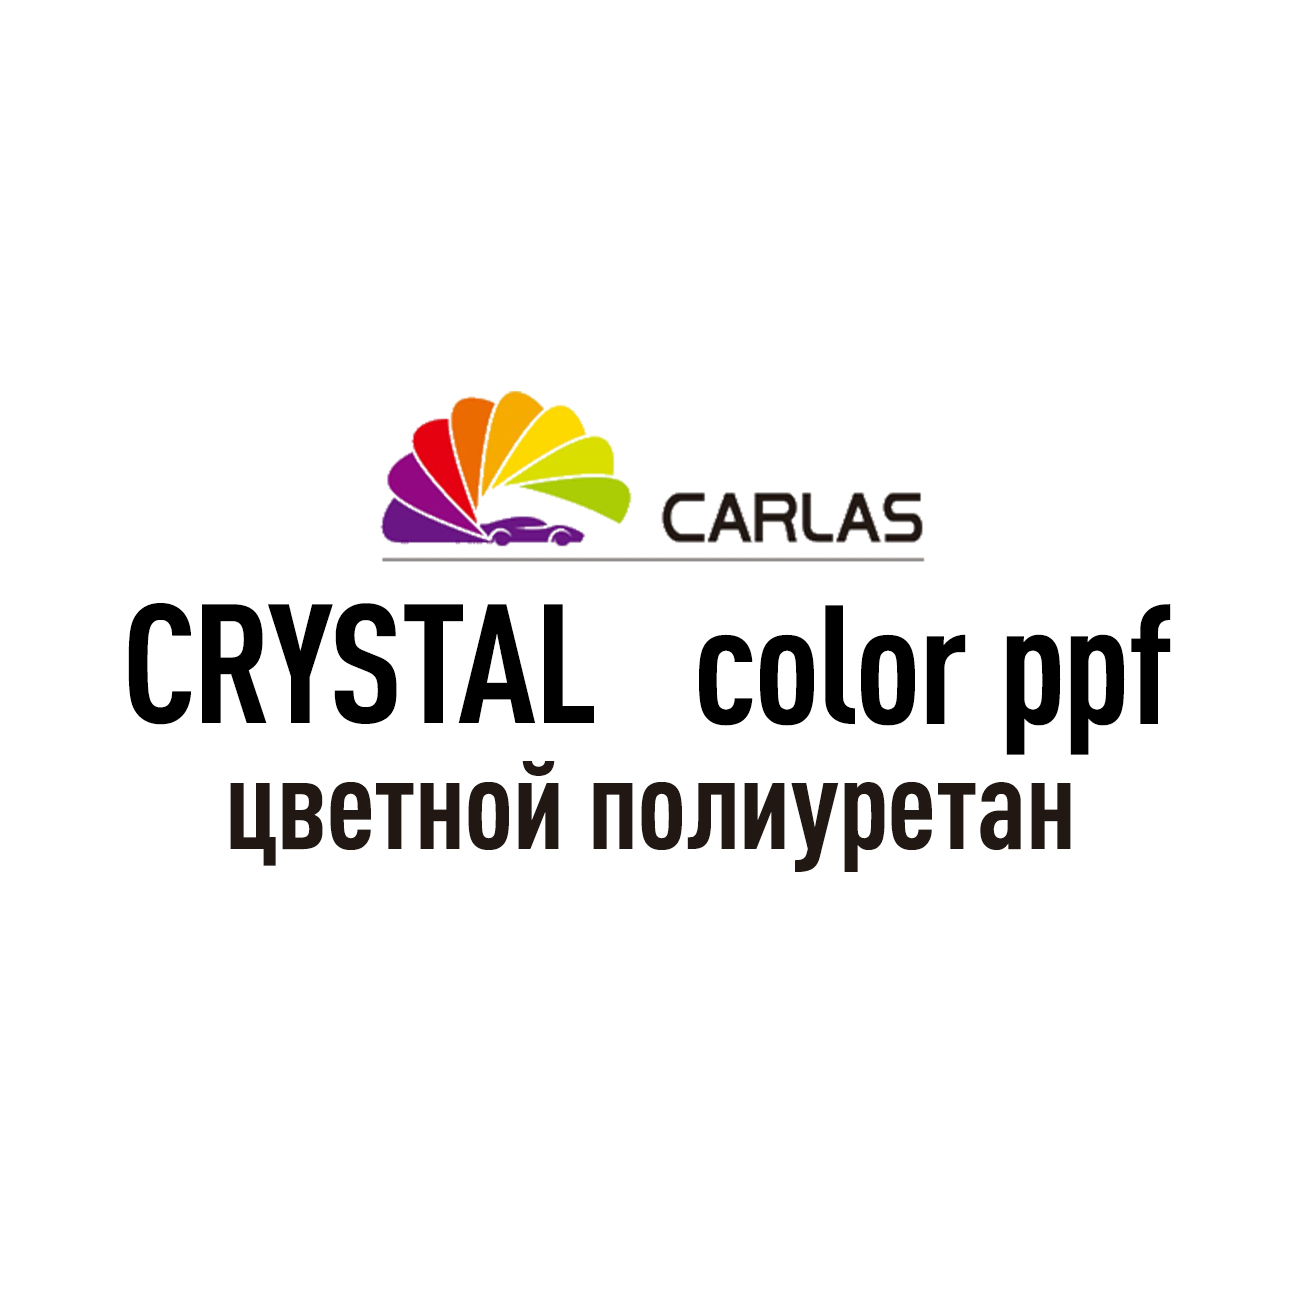 Crystal Сolor PPF 